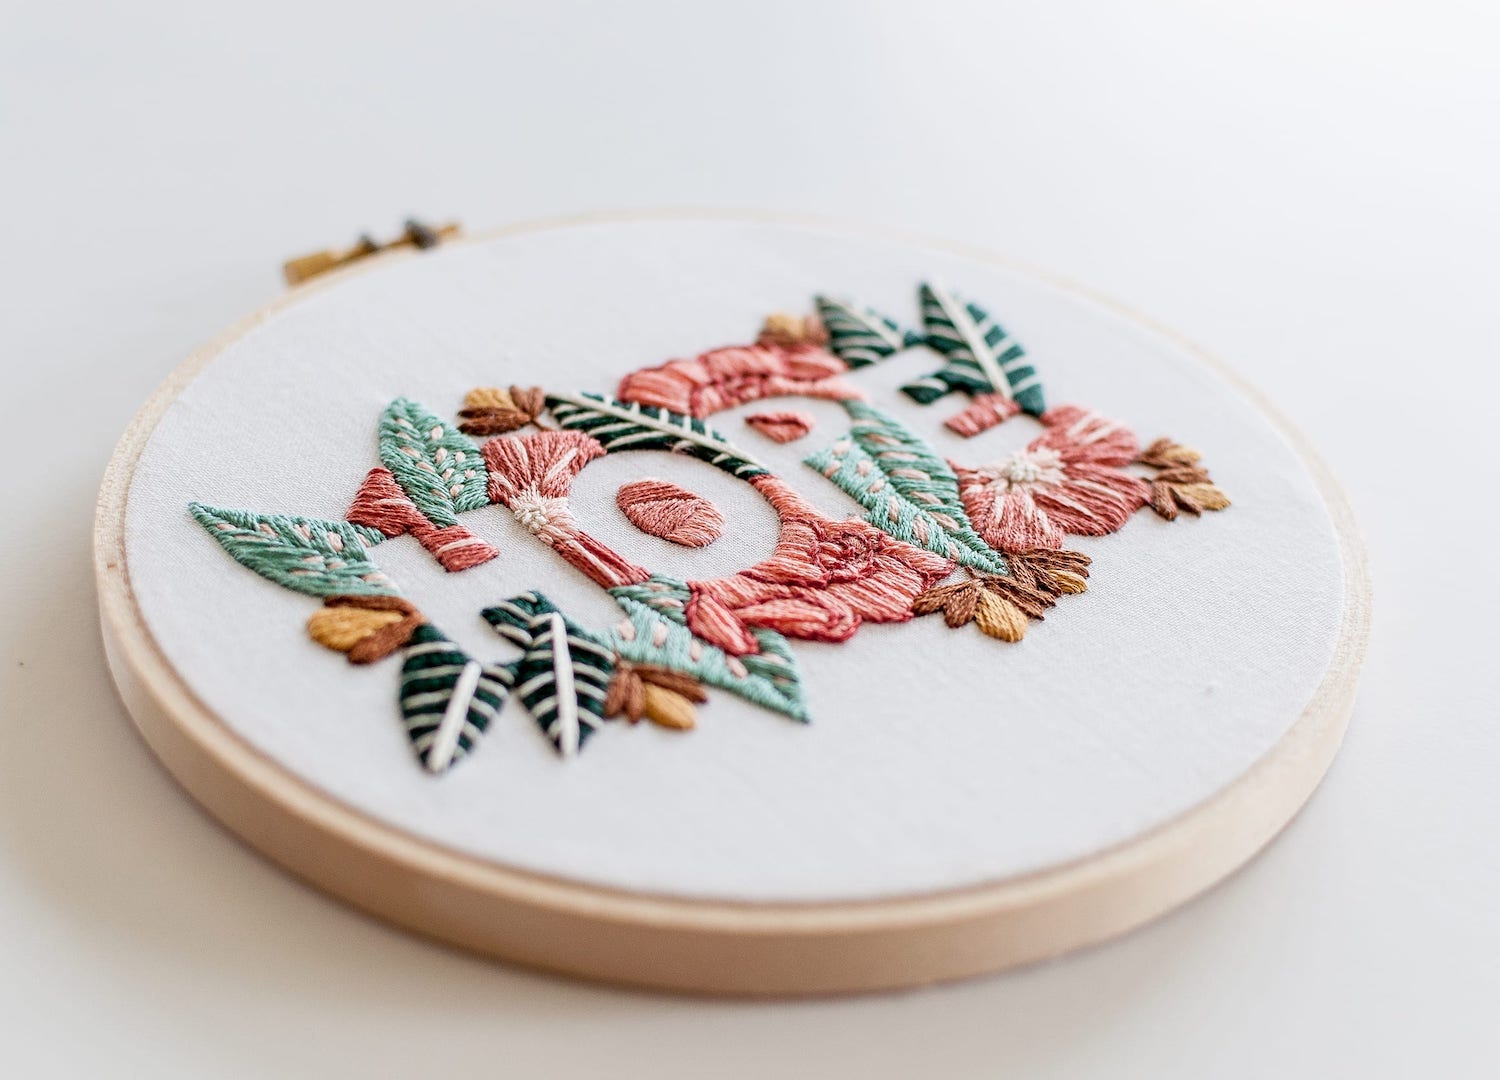 HAND U JOURNEY 4 PCS Embroidery Stitch Starter Kits, DIY Beginners